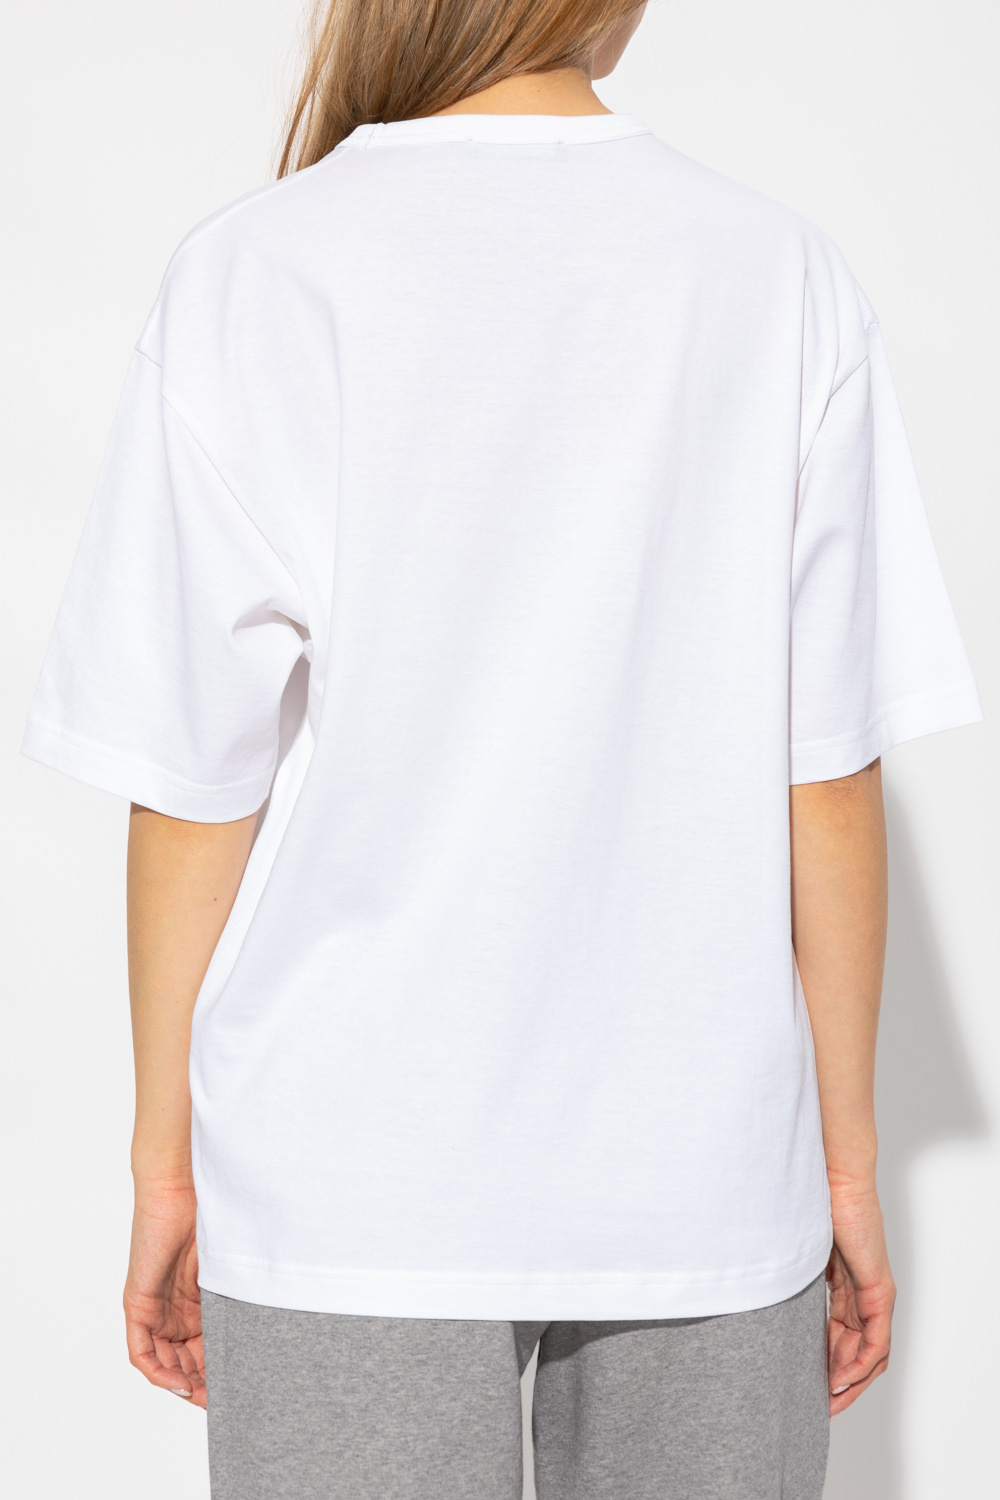 Acne Studios emporio armani floral print t shirt item